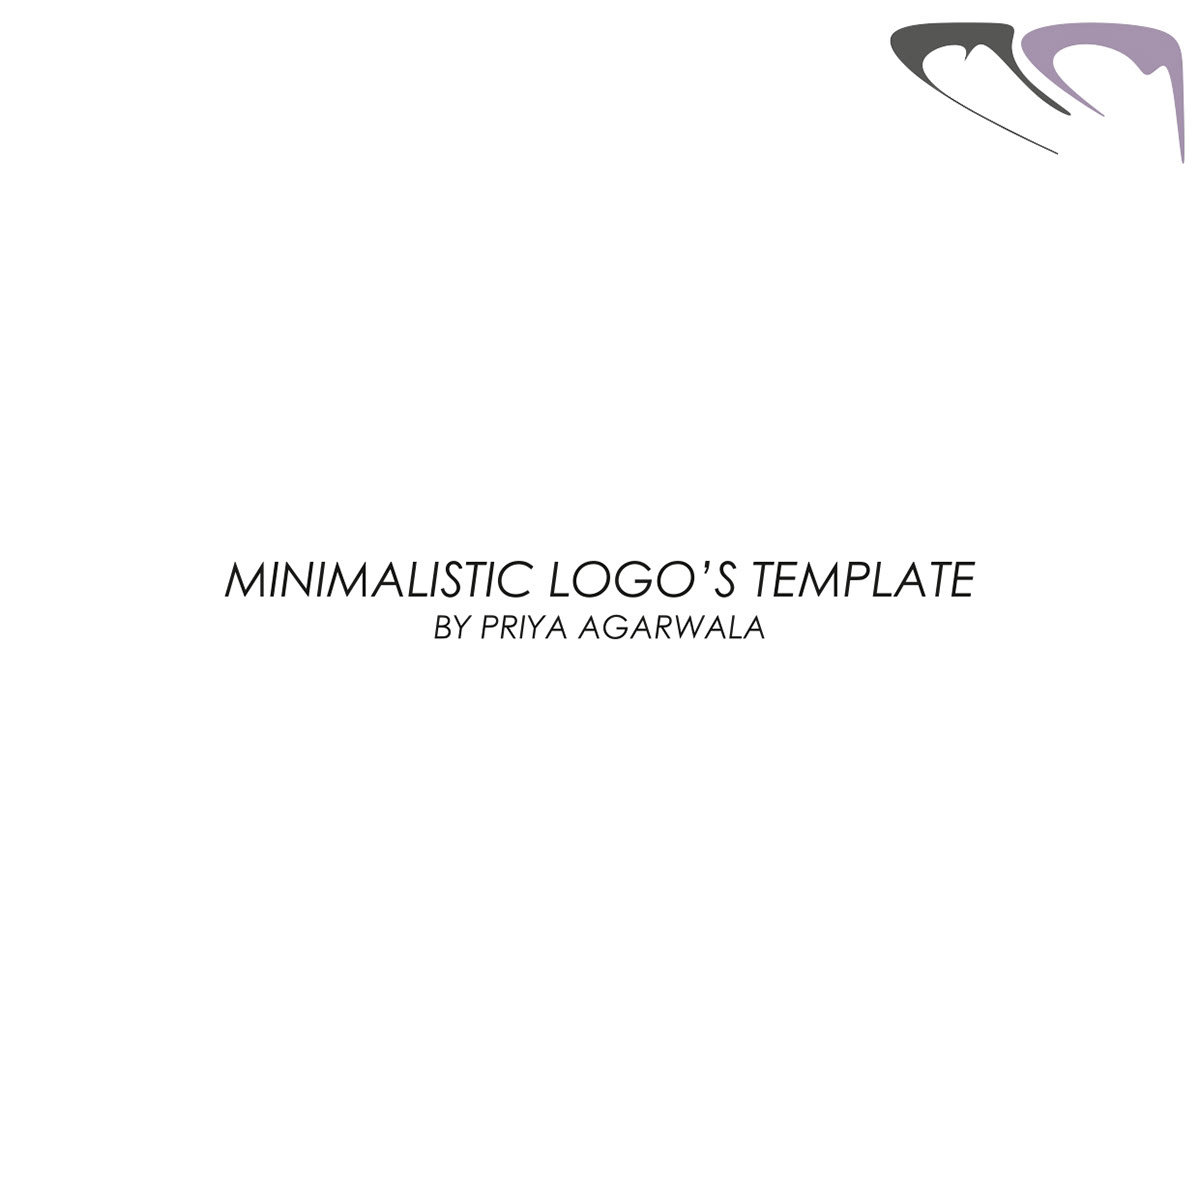 company company logo logo milenials Minimalism minimalistic